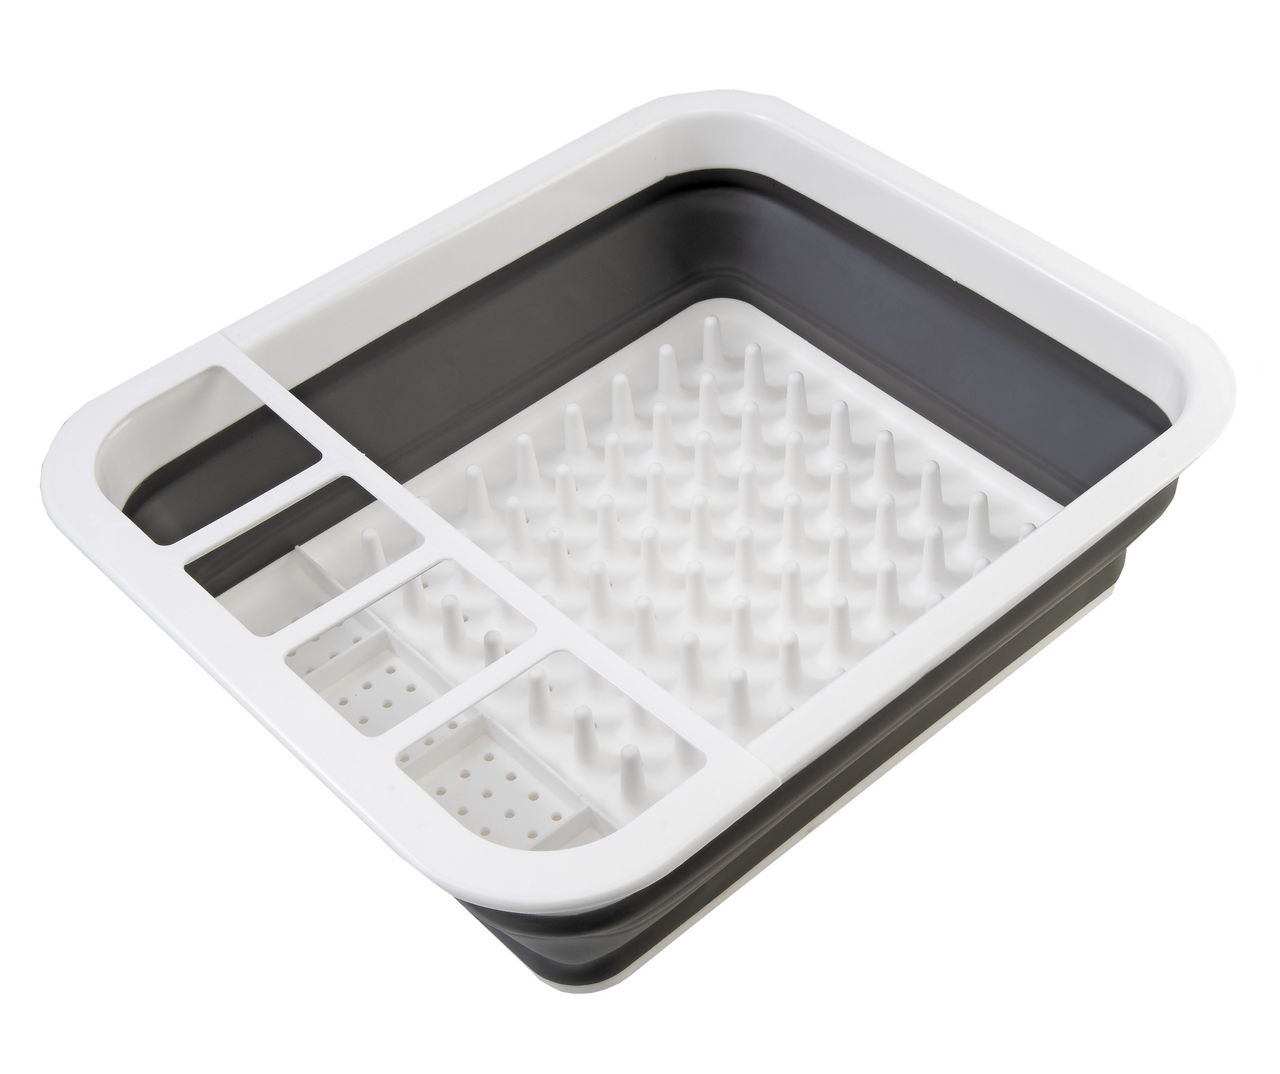 Foldable Dish Drying Rack Dish Drainer w/Utensil Holder - M - Bed Bath &  Beyond - 29606714